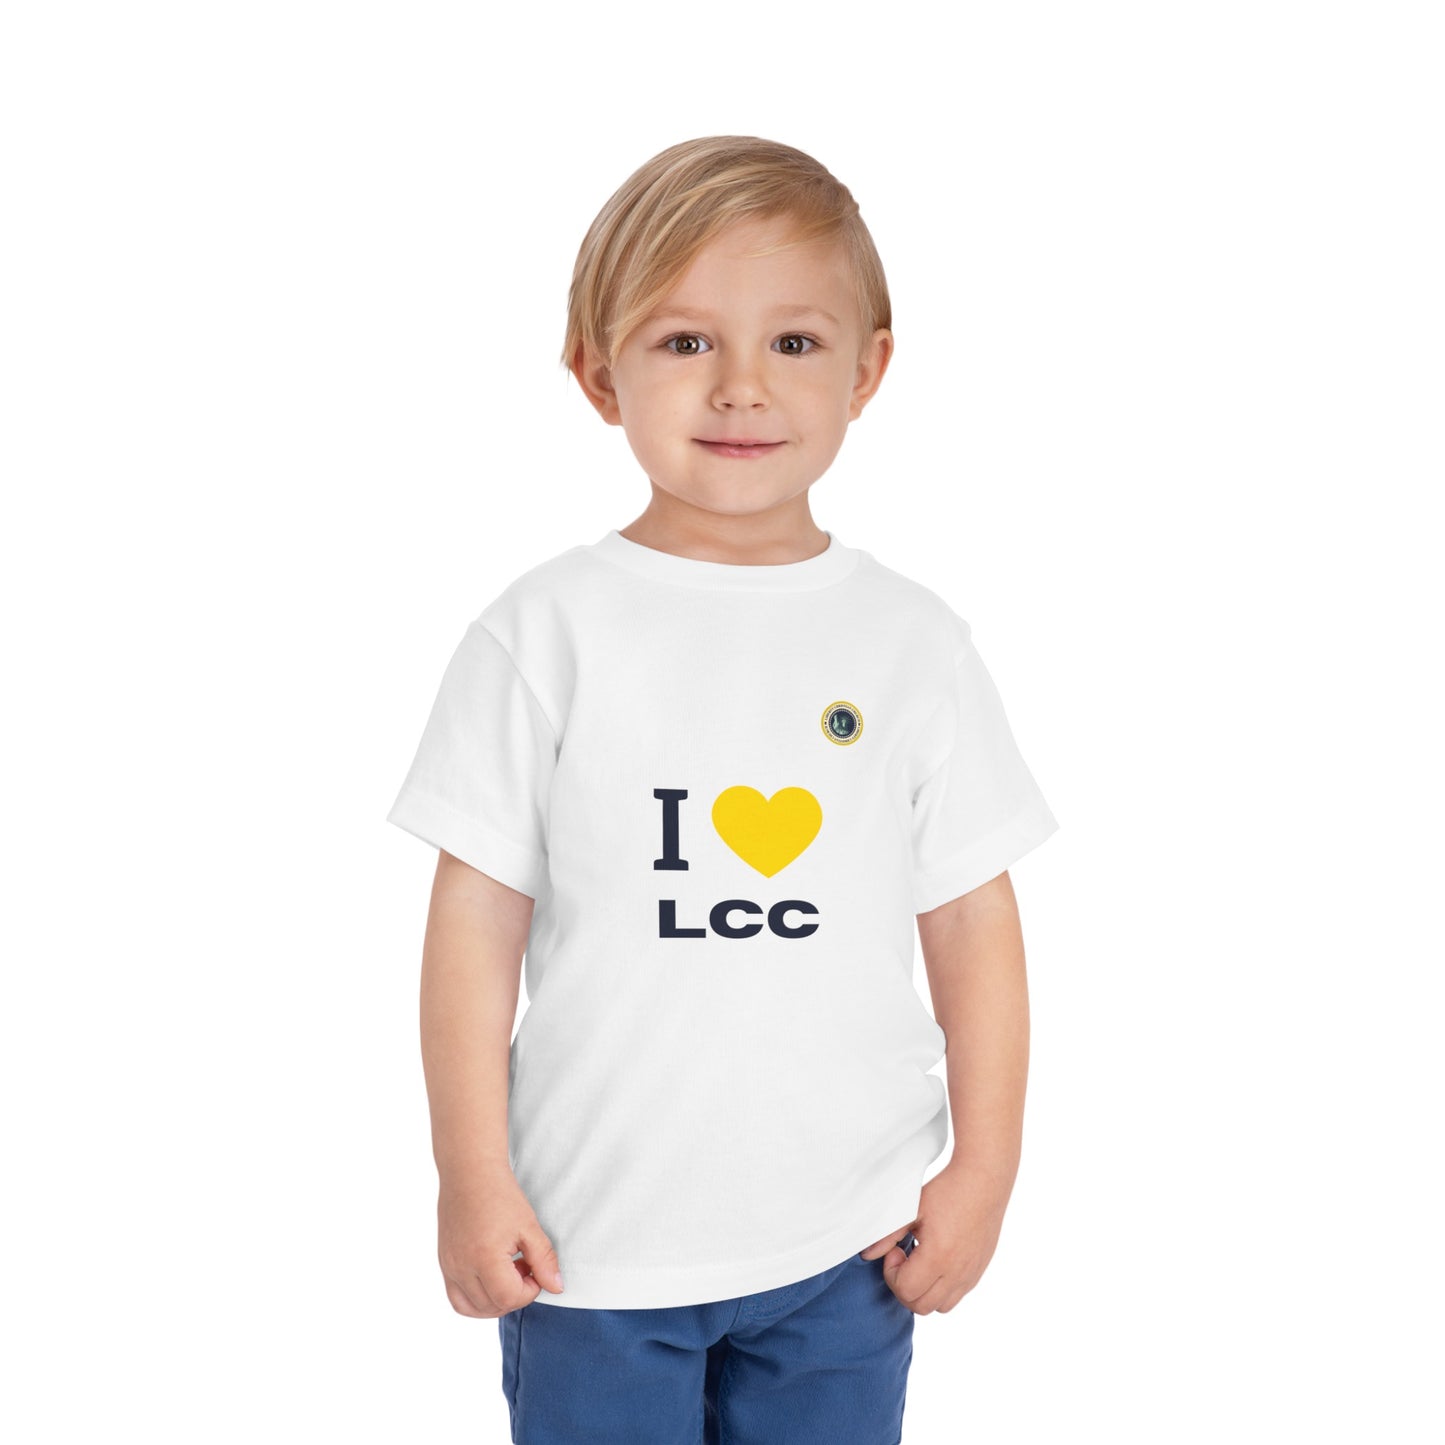 I Love LCC T-shirt (Toddler)